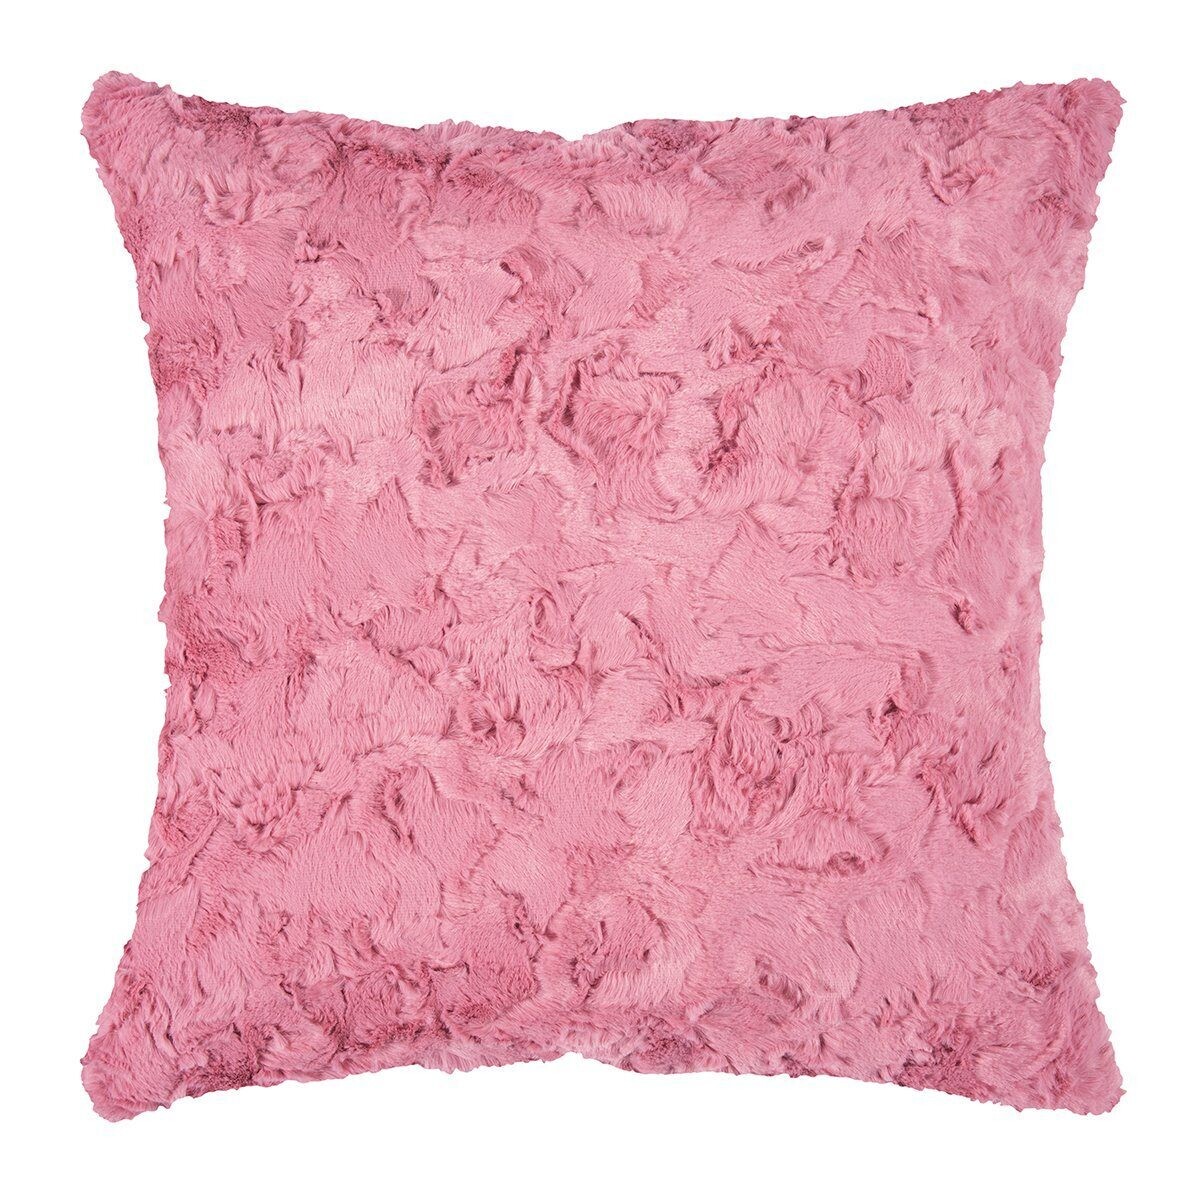 Kissenbezug Bardot pink in 45x45 cm, pad home